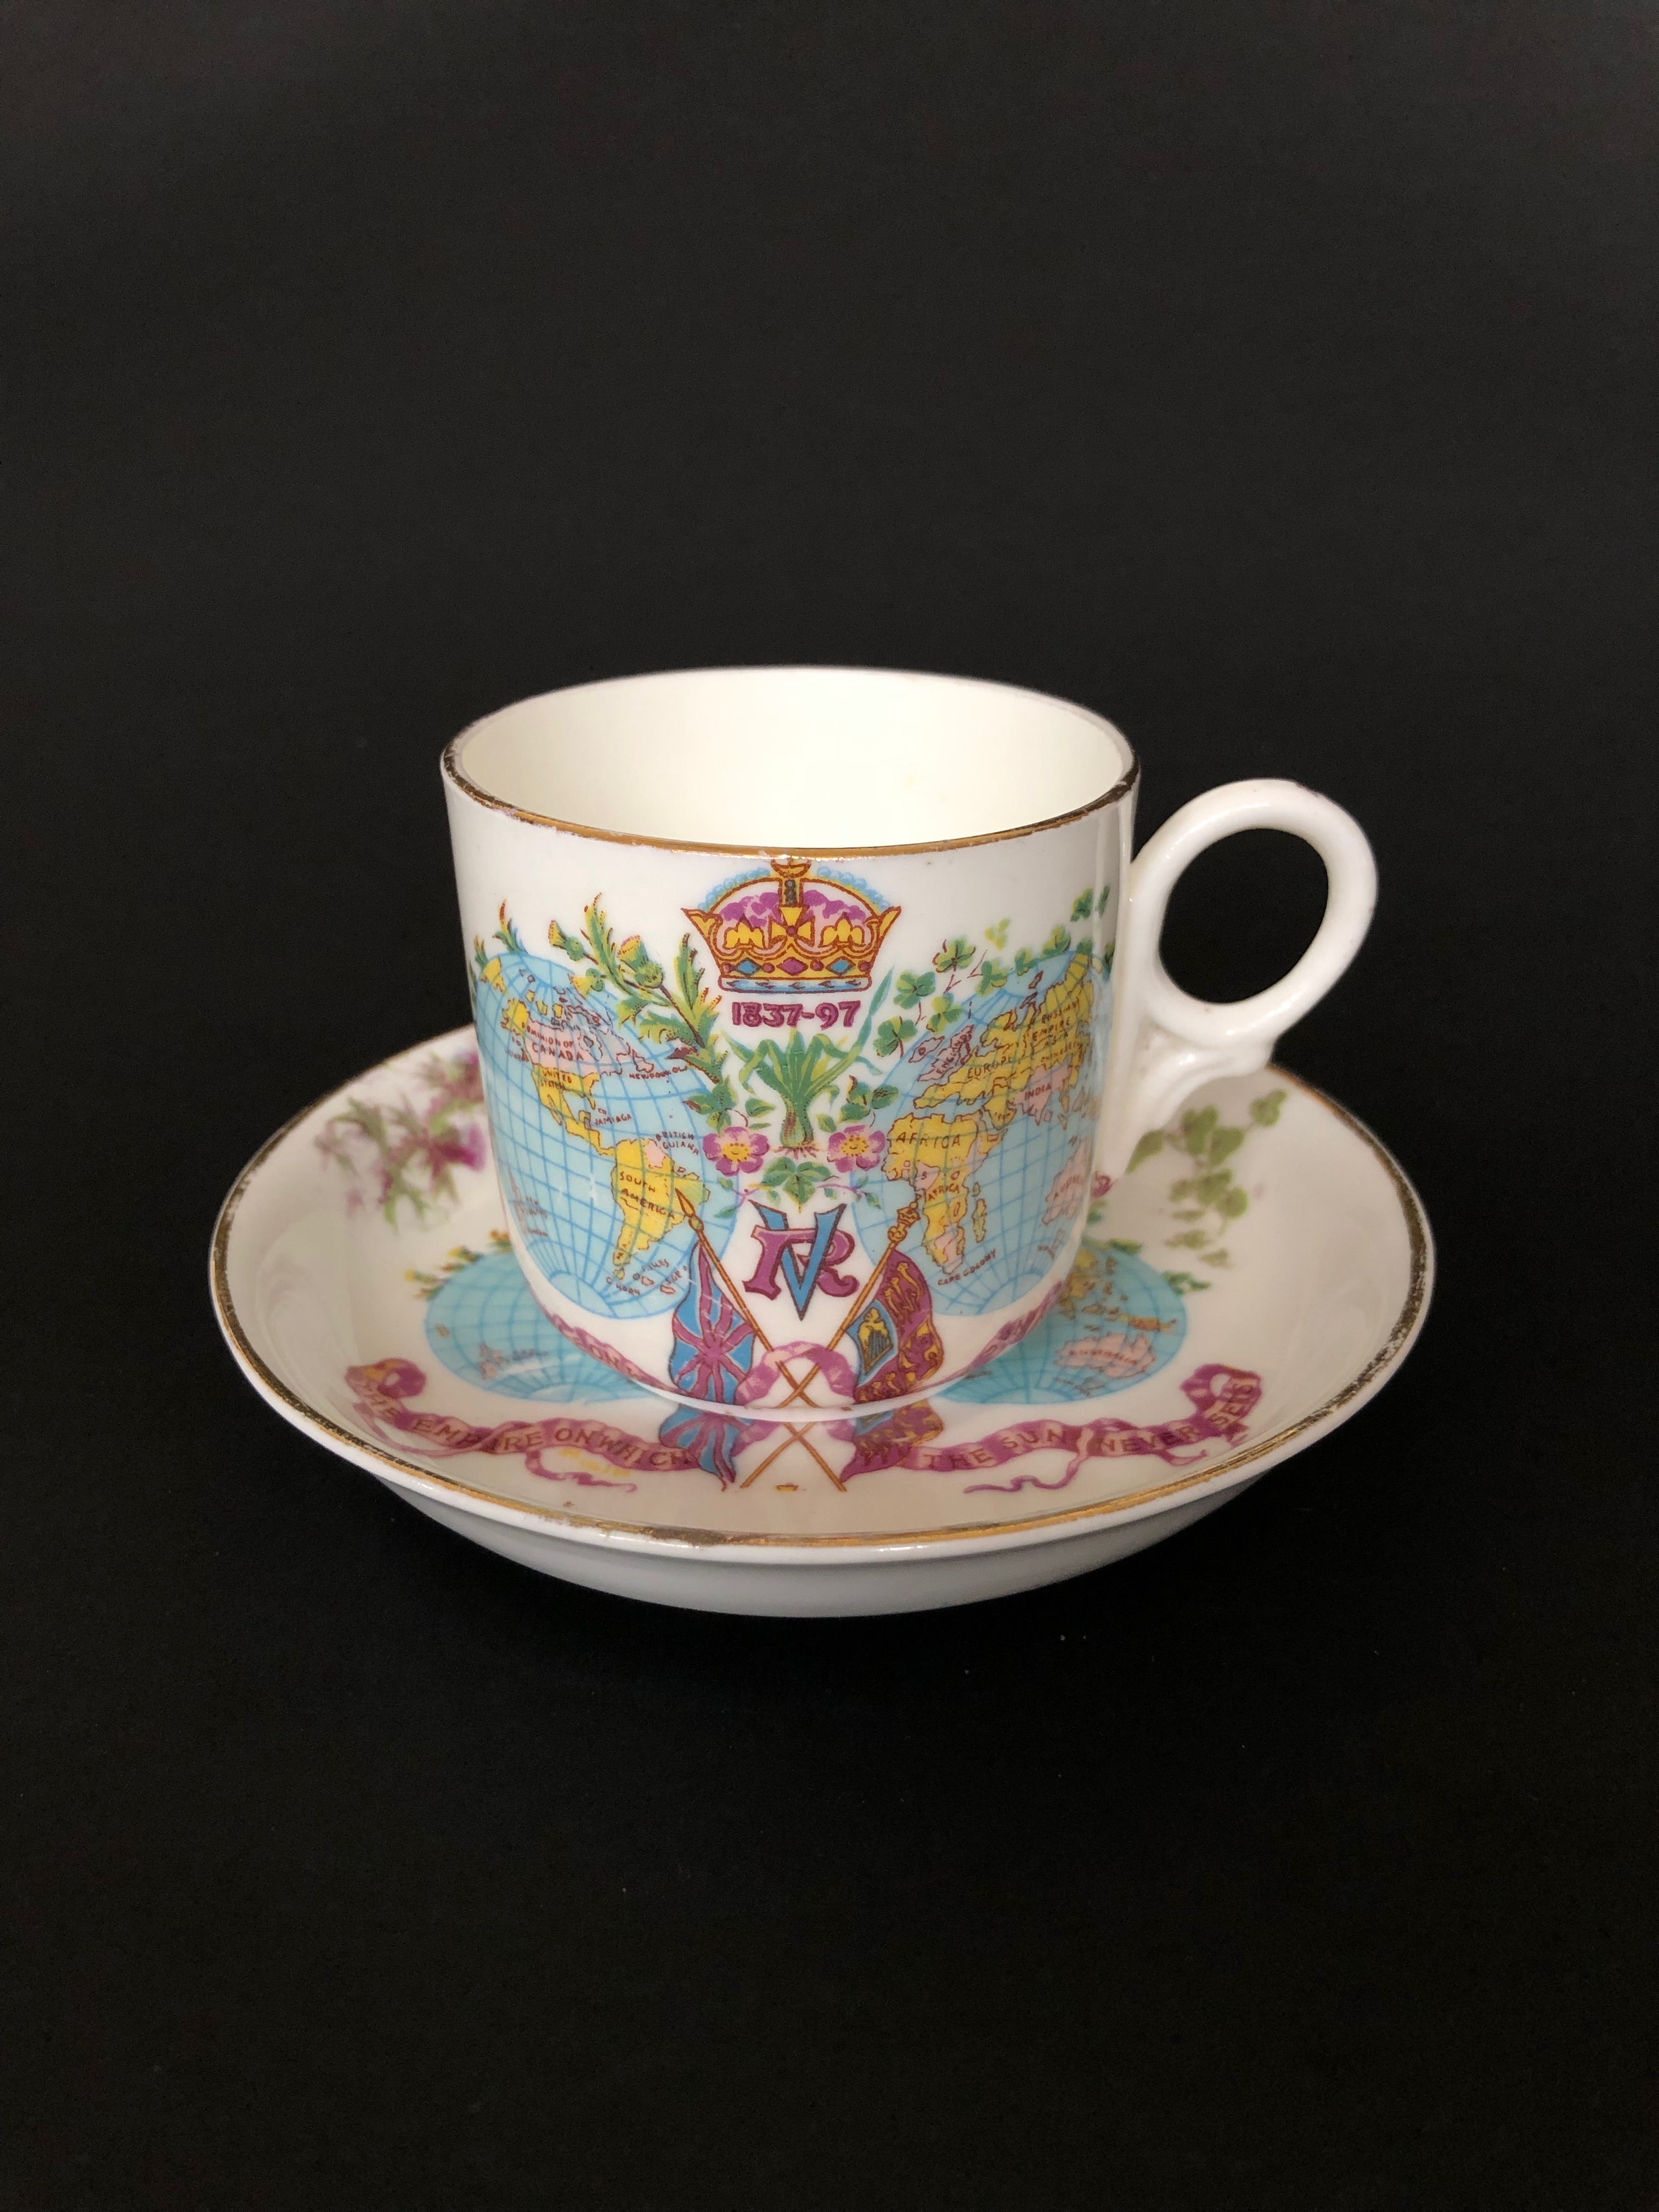 DIAMOND JUBILEE Teacup and Saucer, 1897